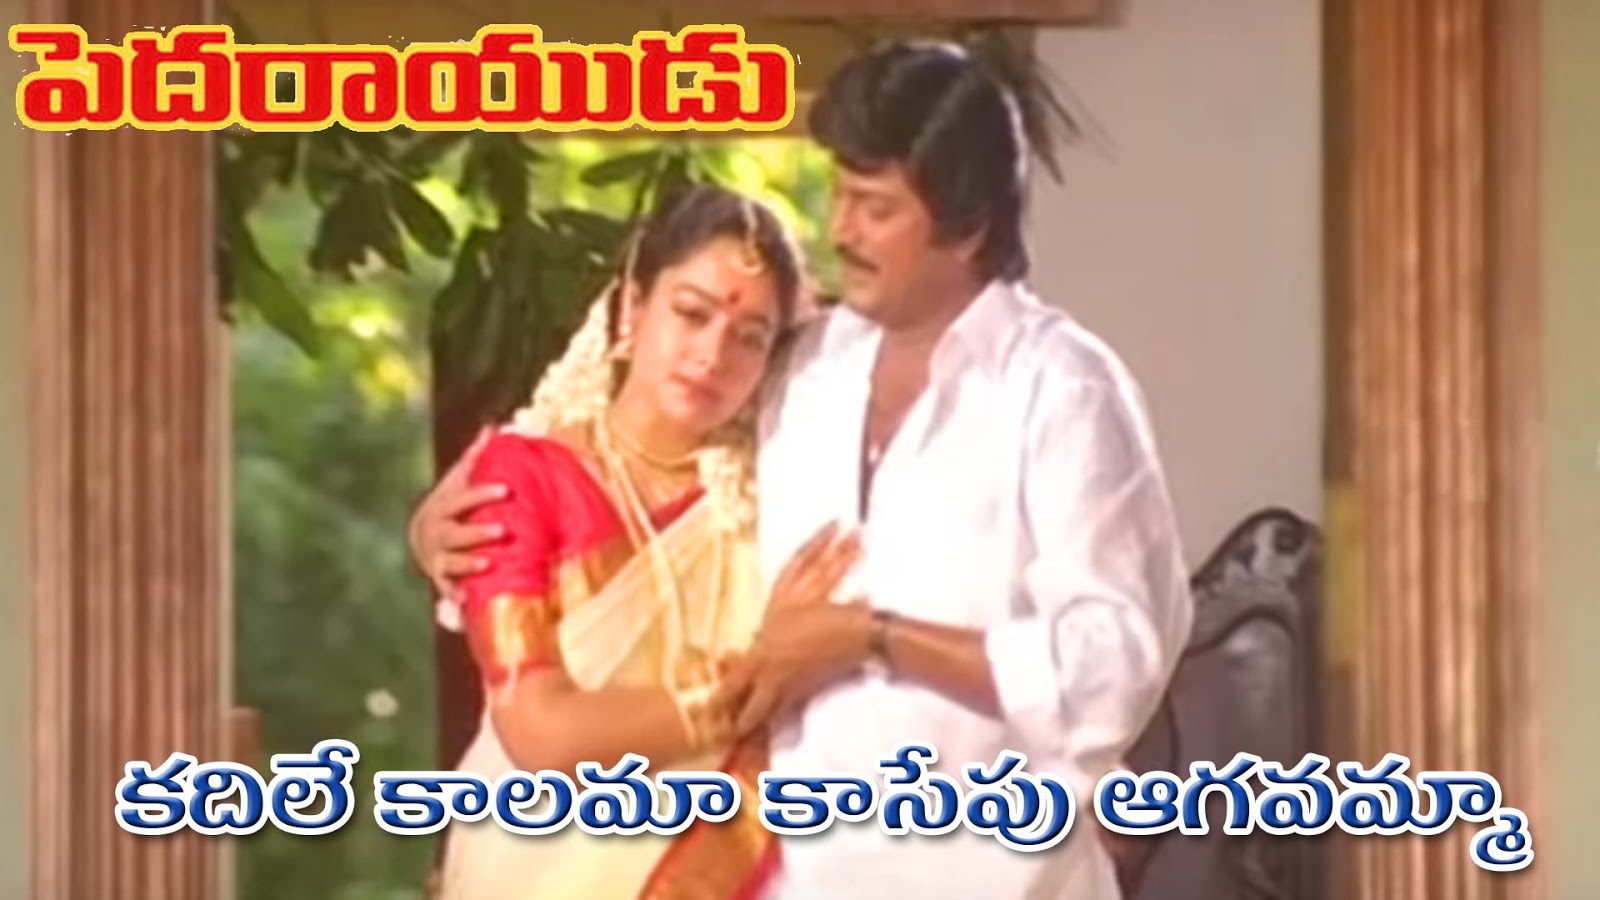 Kadile Kalama Telugu Song Lyrics - Pedarayudu (1995) - AtoZ Lyrics - Telugu  Songs Lyrics | A to Z Telugu Songs Lyrics in English | Old Telugu Songs  Lyrics